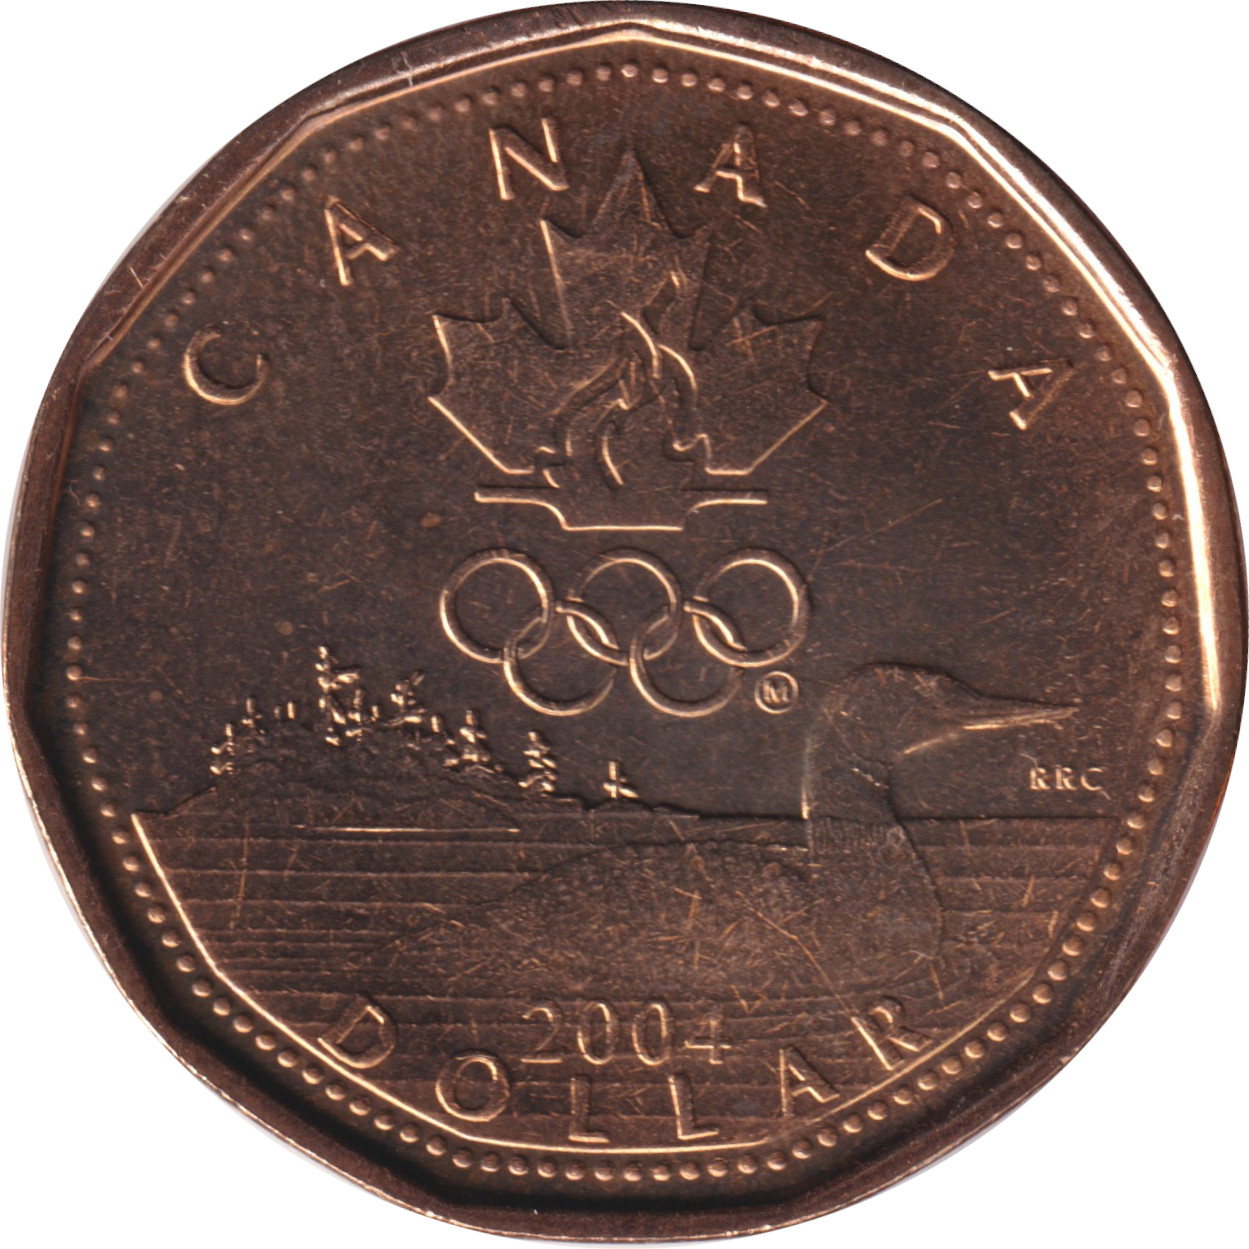 1 dollar - Huard olympique 2004